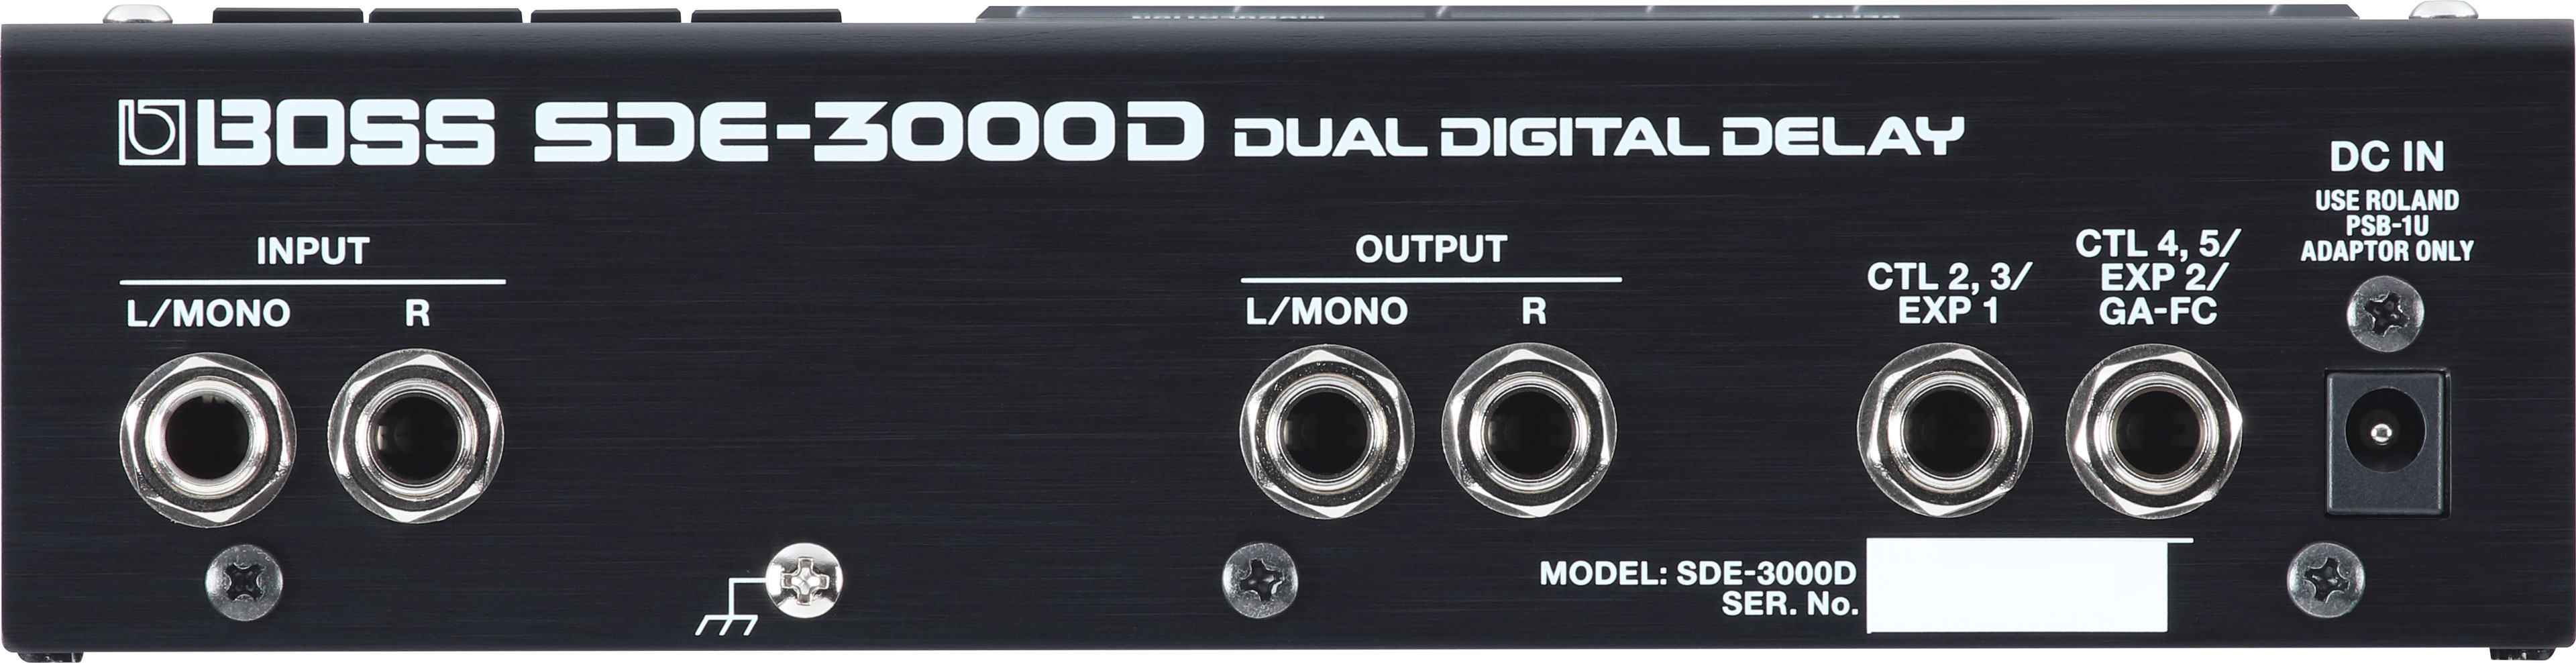 SDE-3000D Dual Digital Delay背面画像